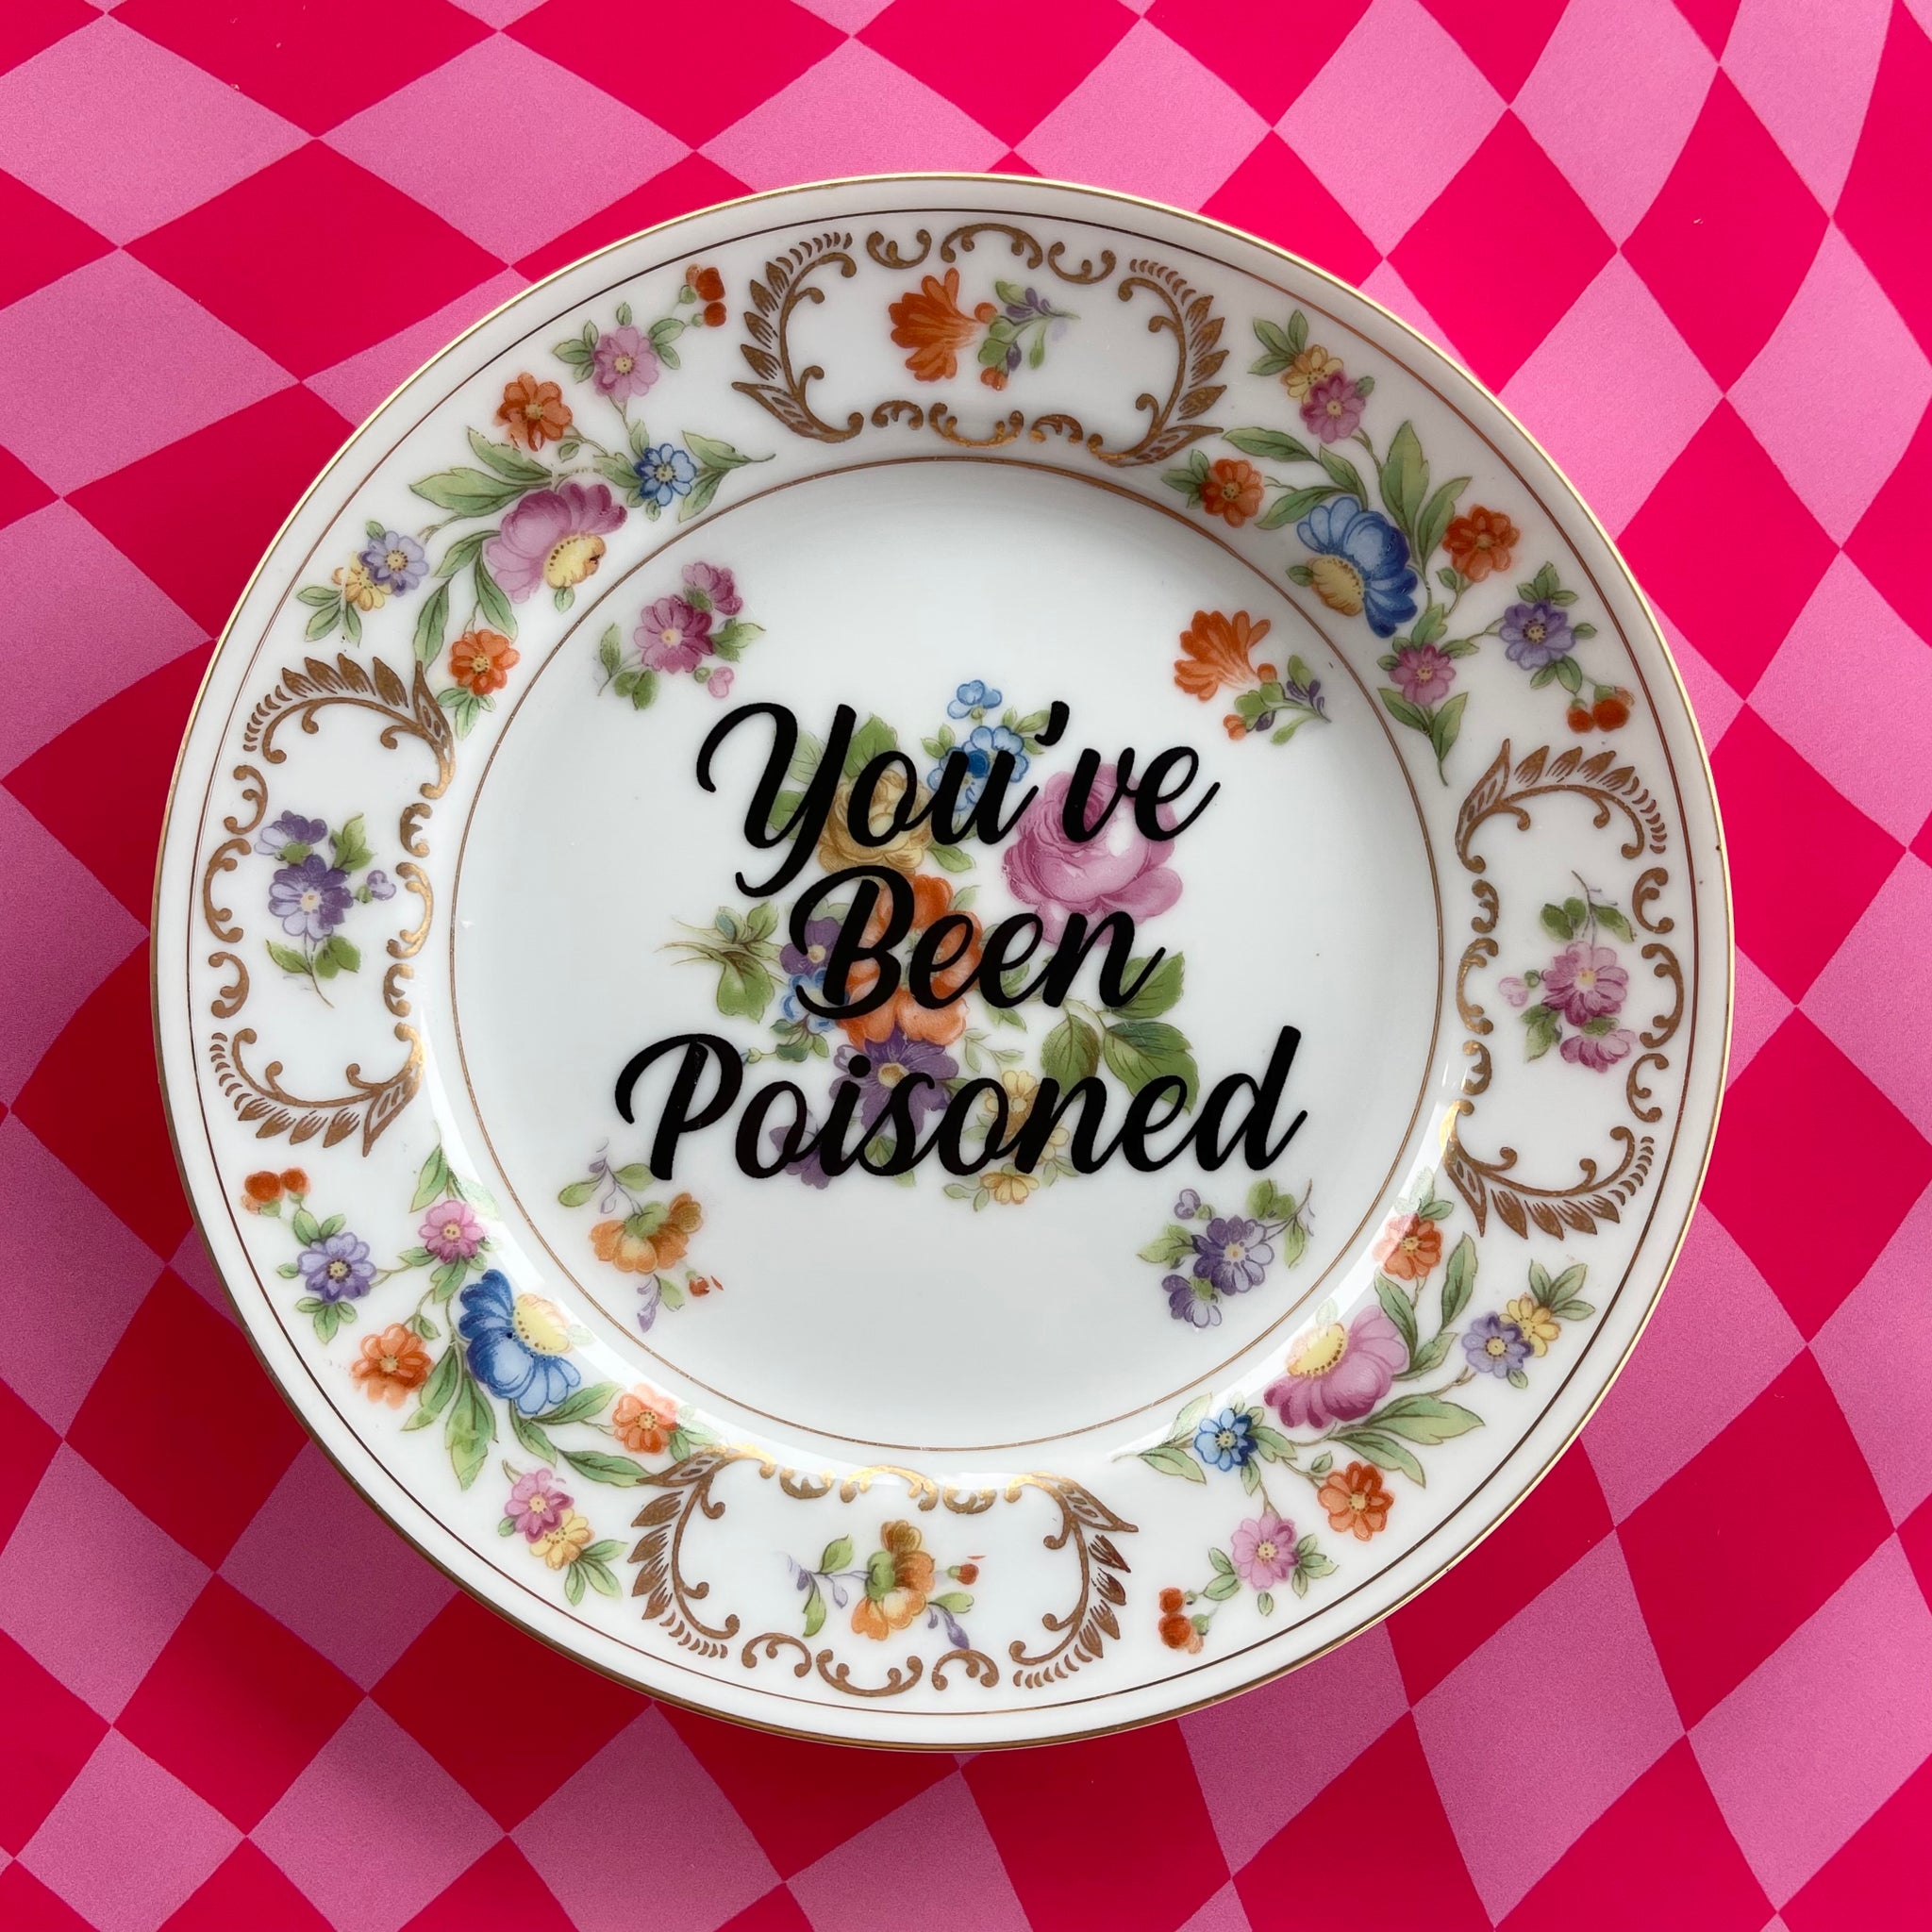 You've Been Poisoned Vintage Plate